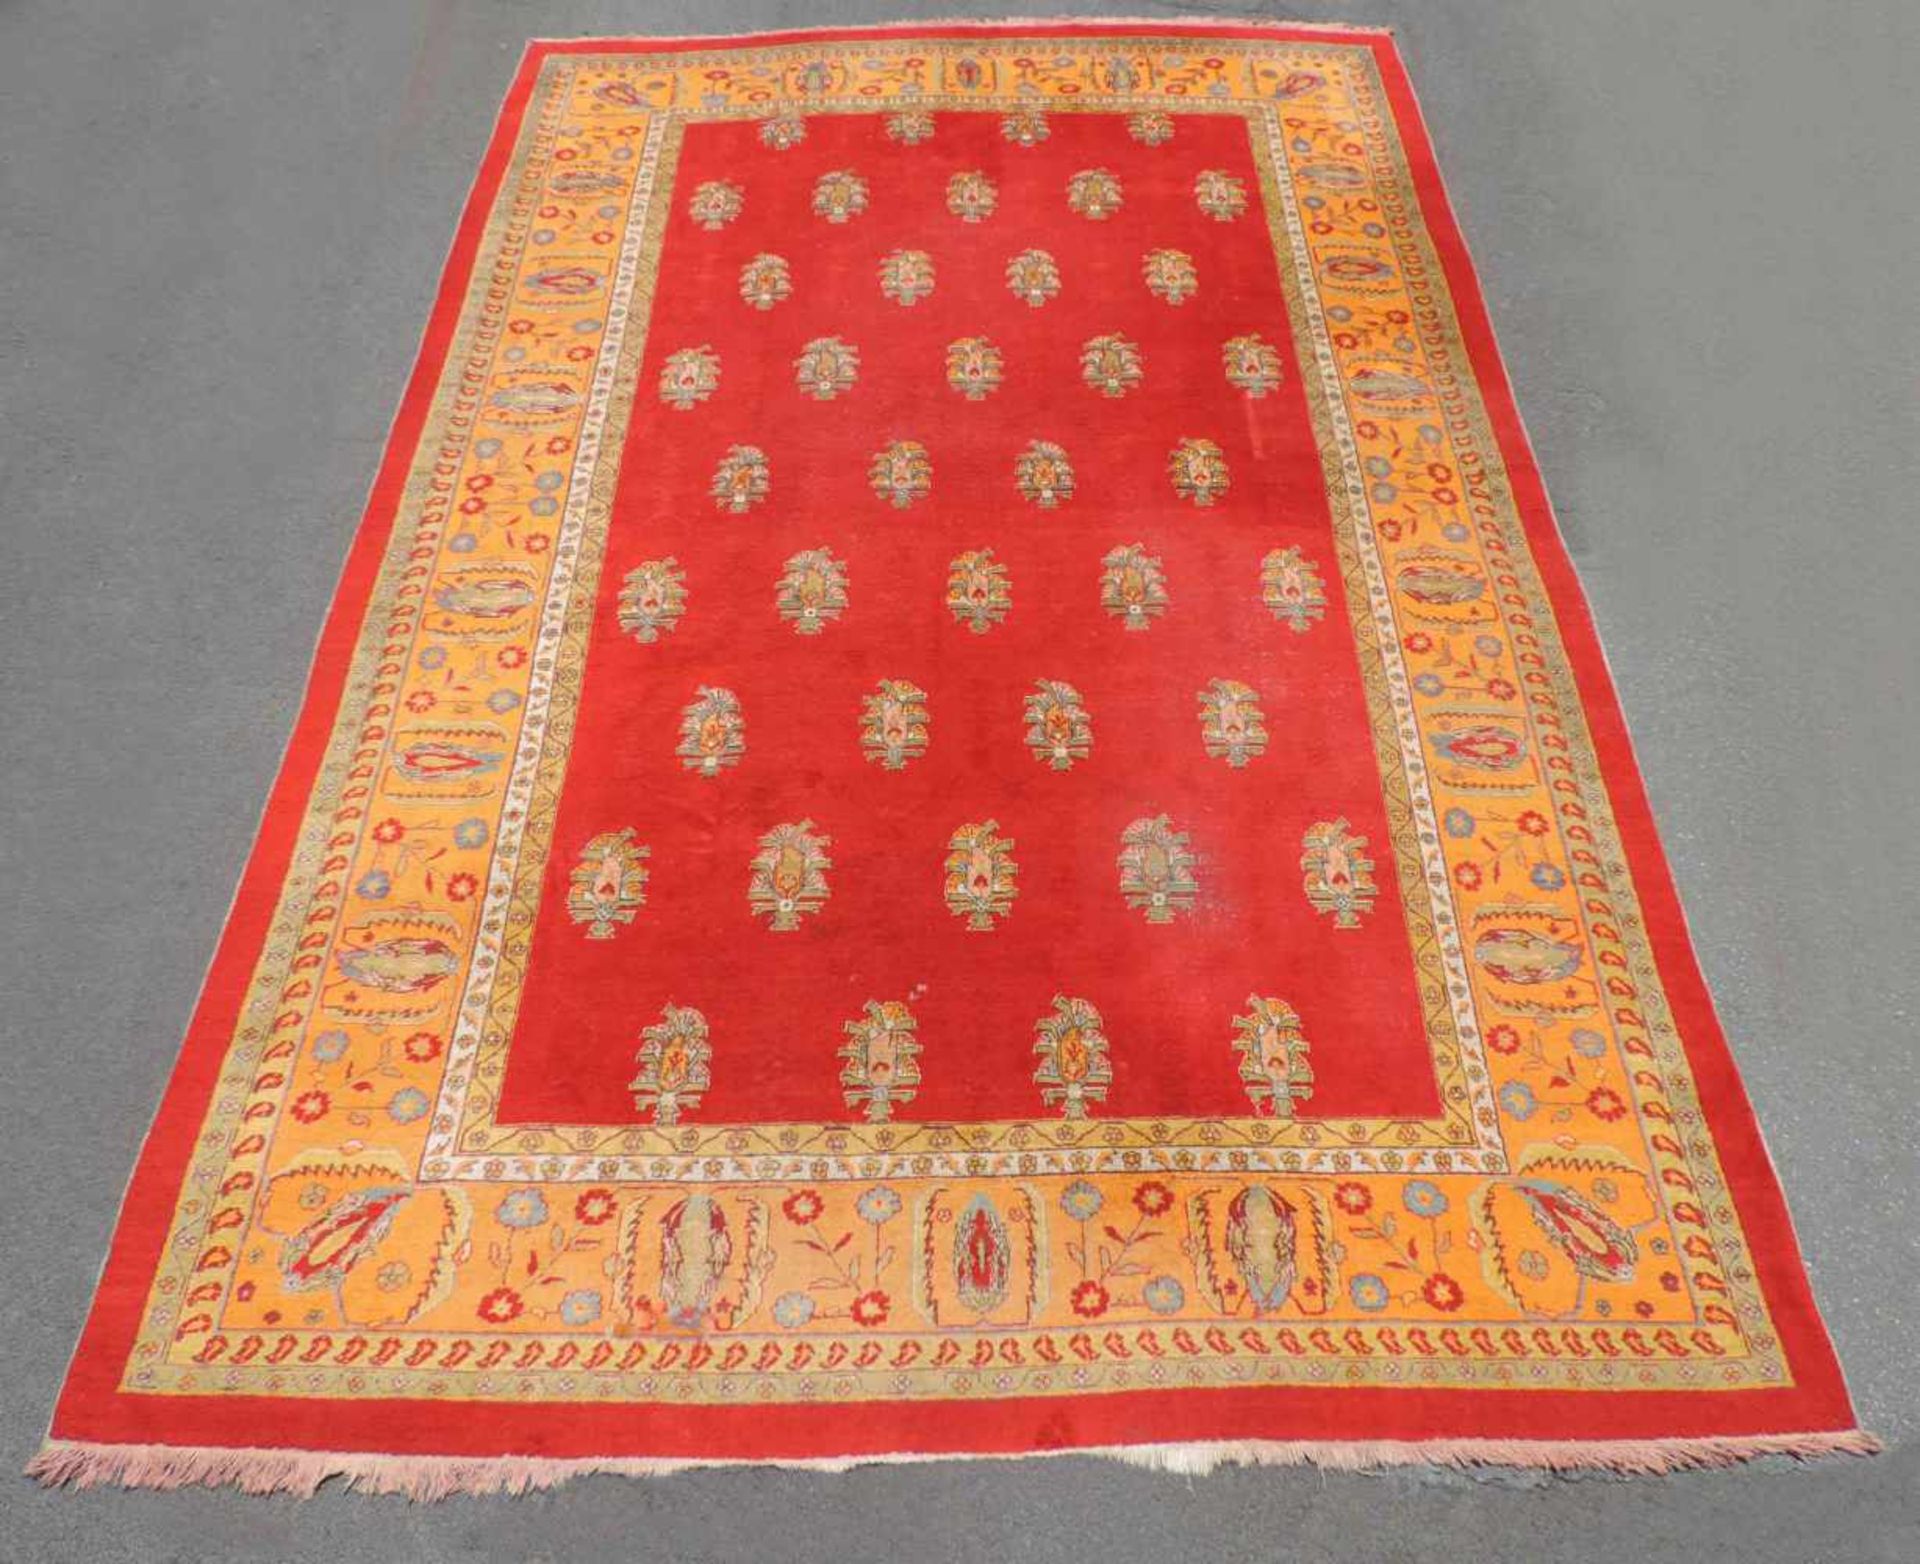 Mughal carpet. Deccani, India around 1800.